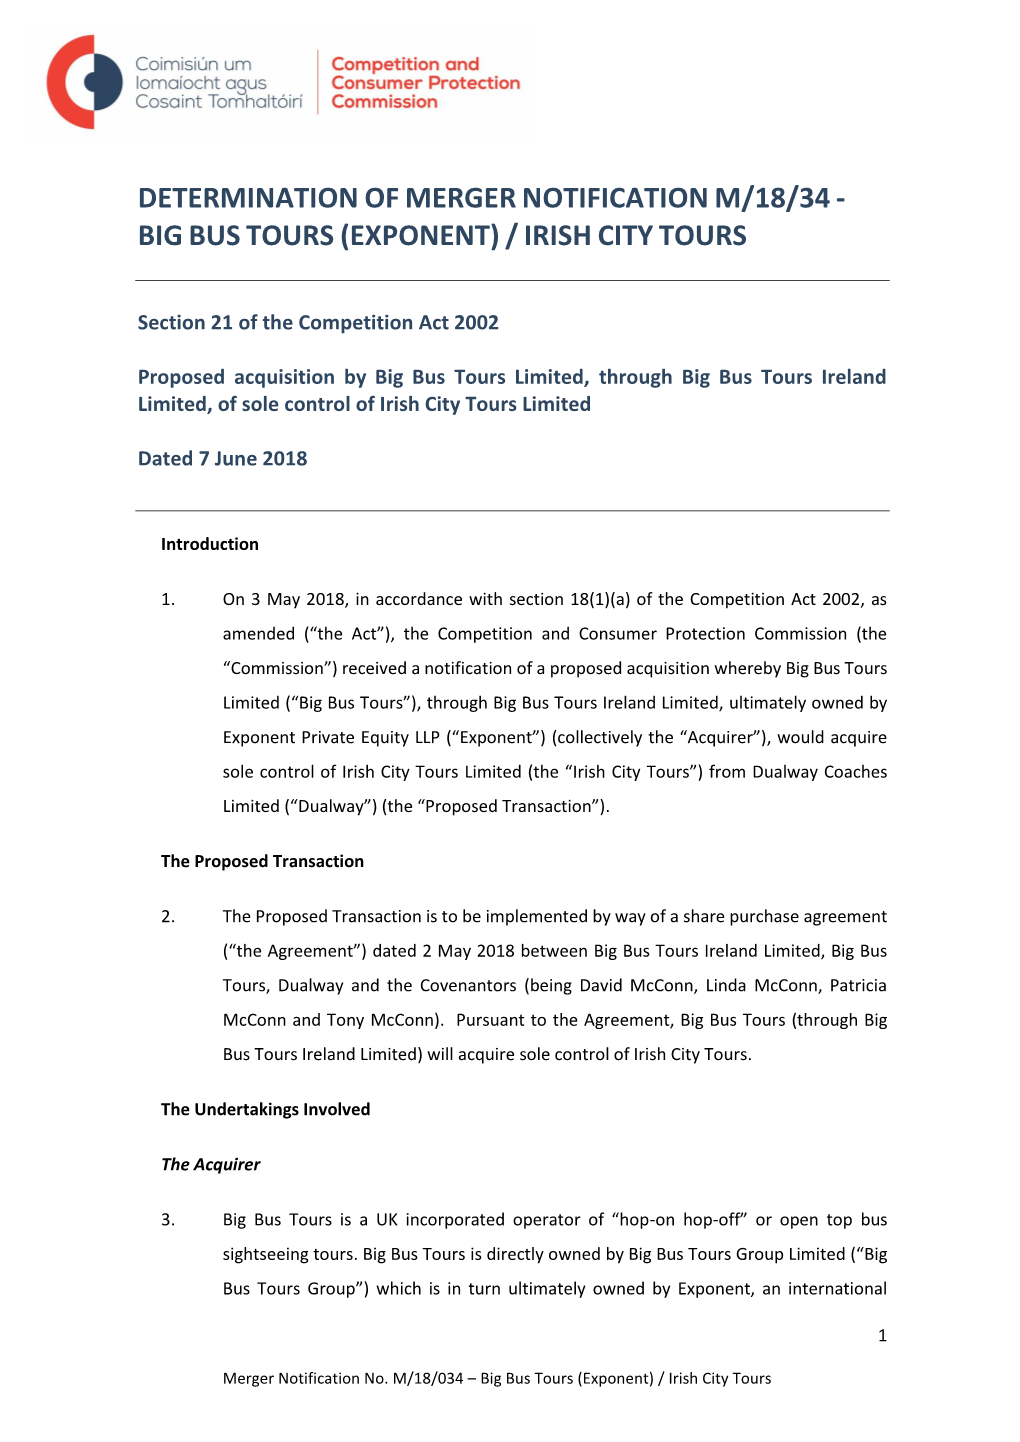 M-18-034 Determination Big Bus Tours -Irish City Tours